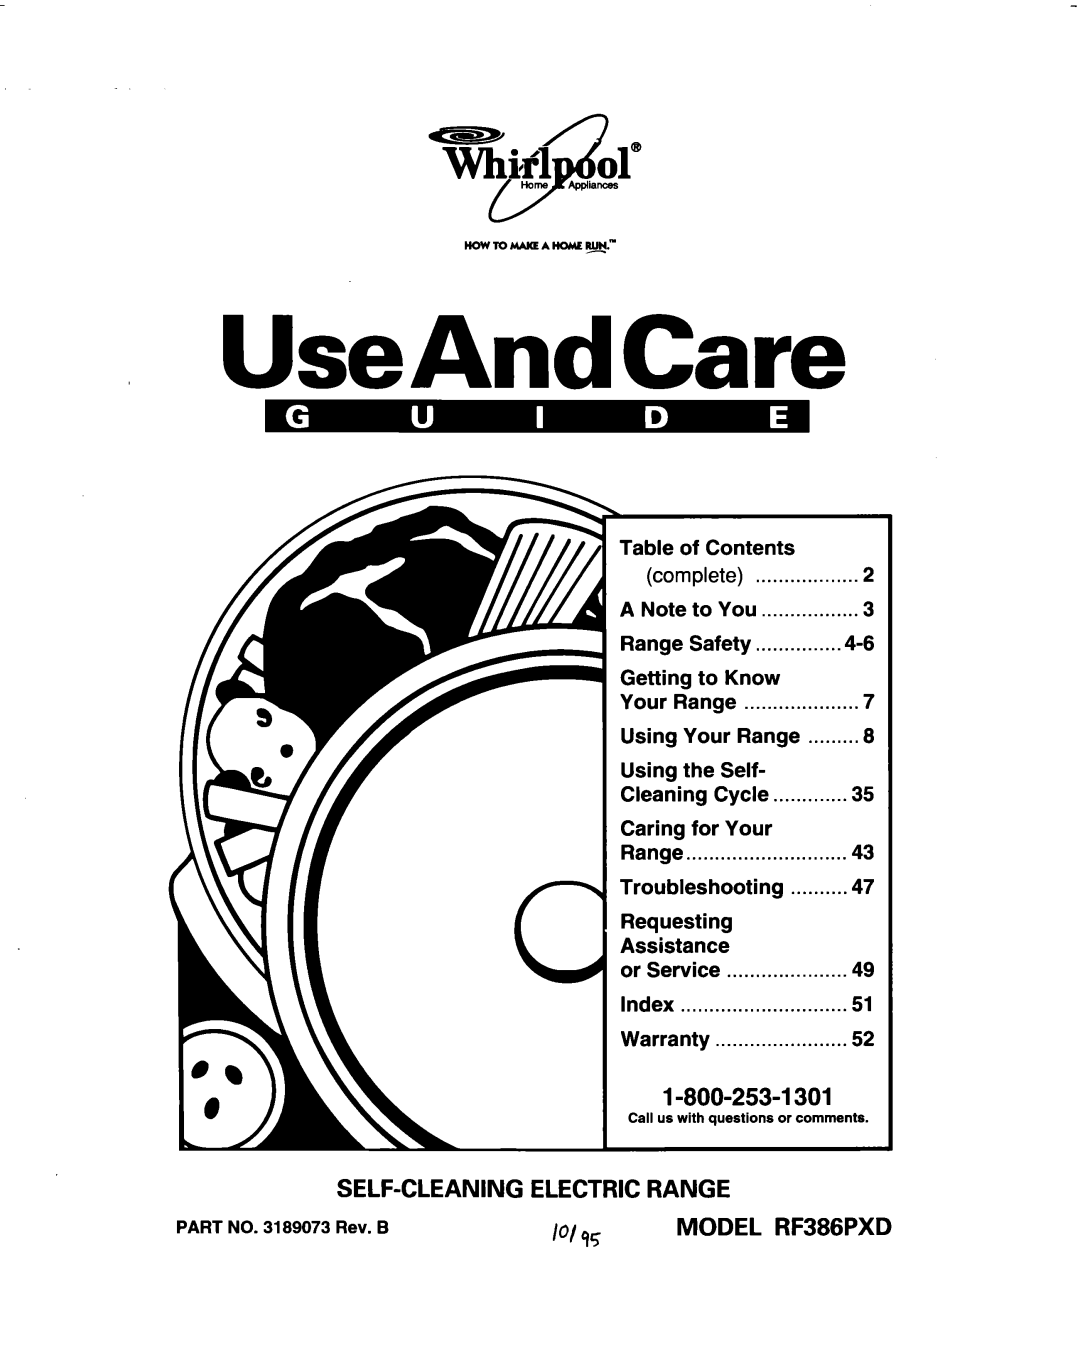 Whirlpool warranty Self-Cleaningelectric Range, MODEL RF386PXD, UseAndCare 